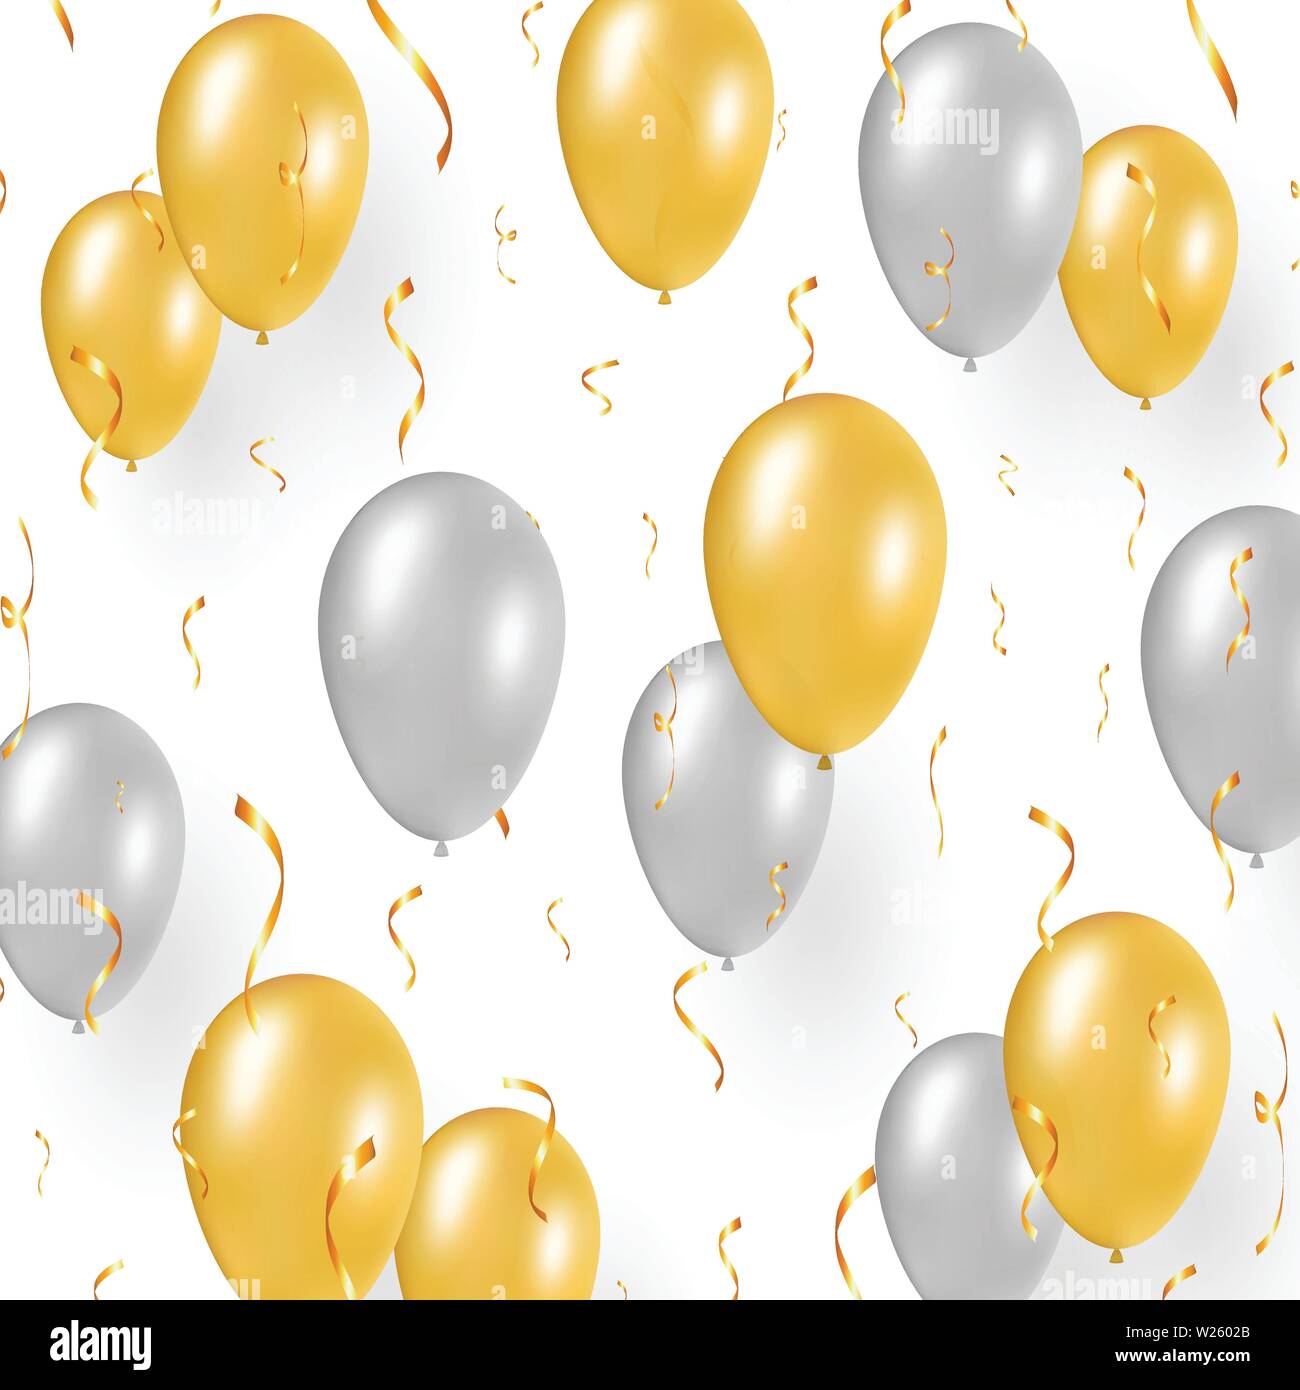 Celebration design with gold balloons, confetti. Stock Vector